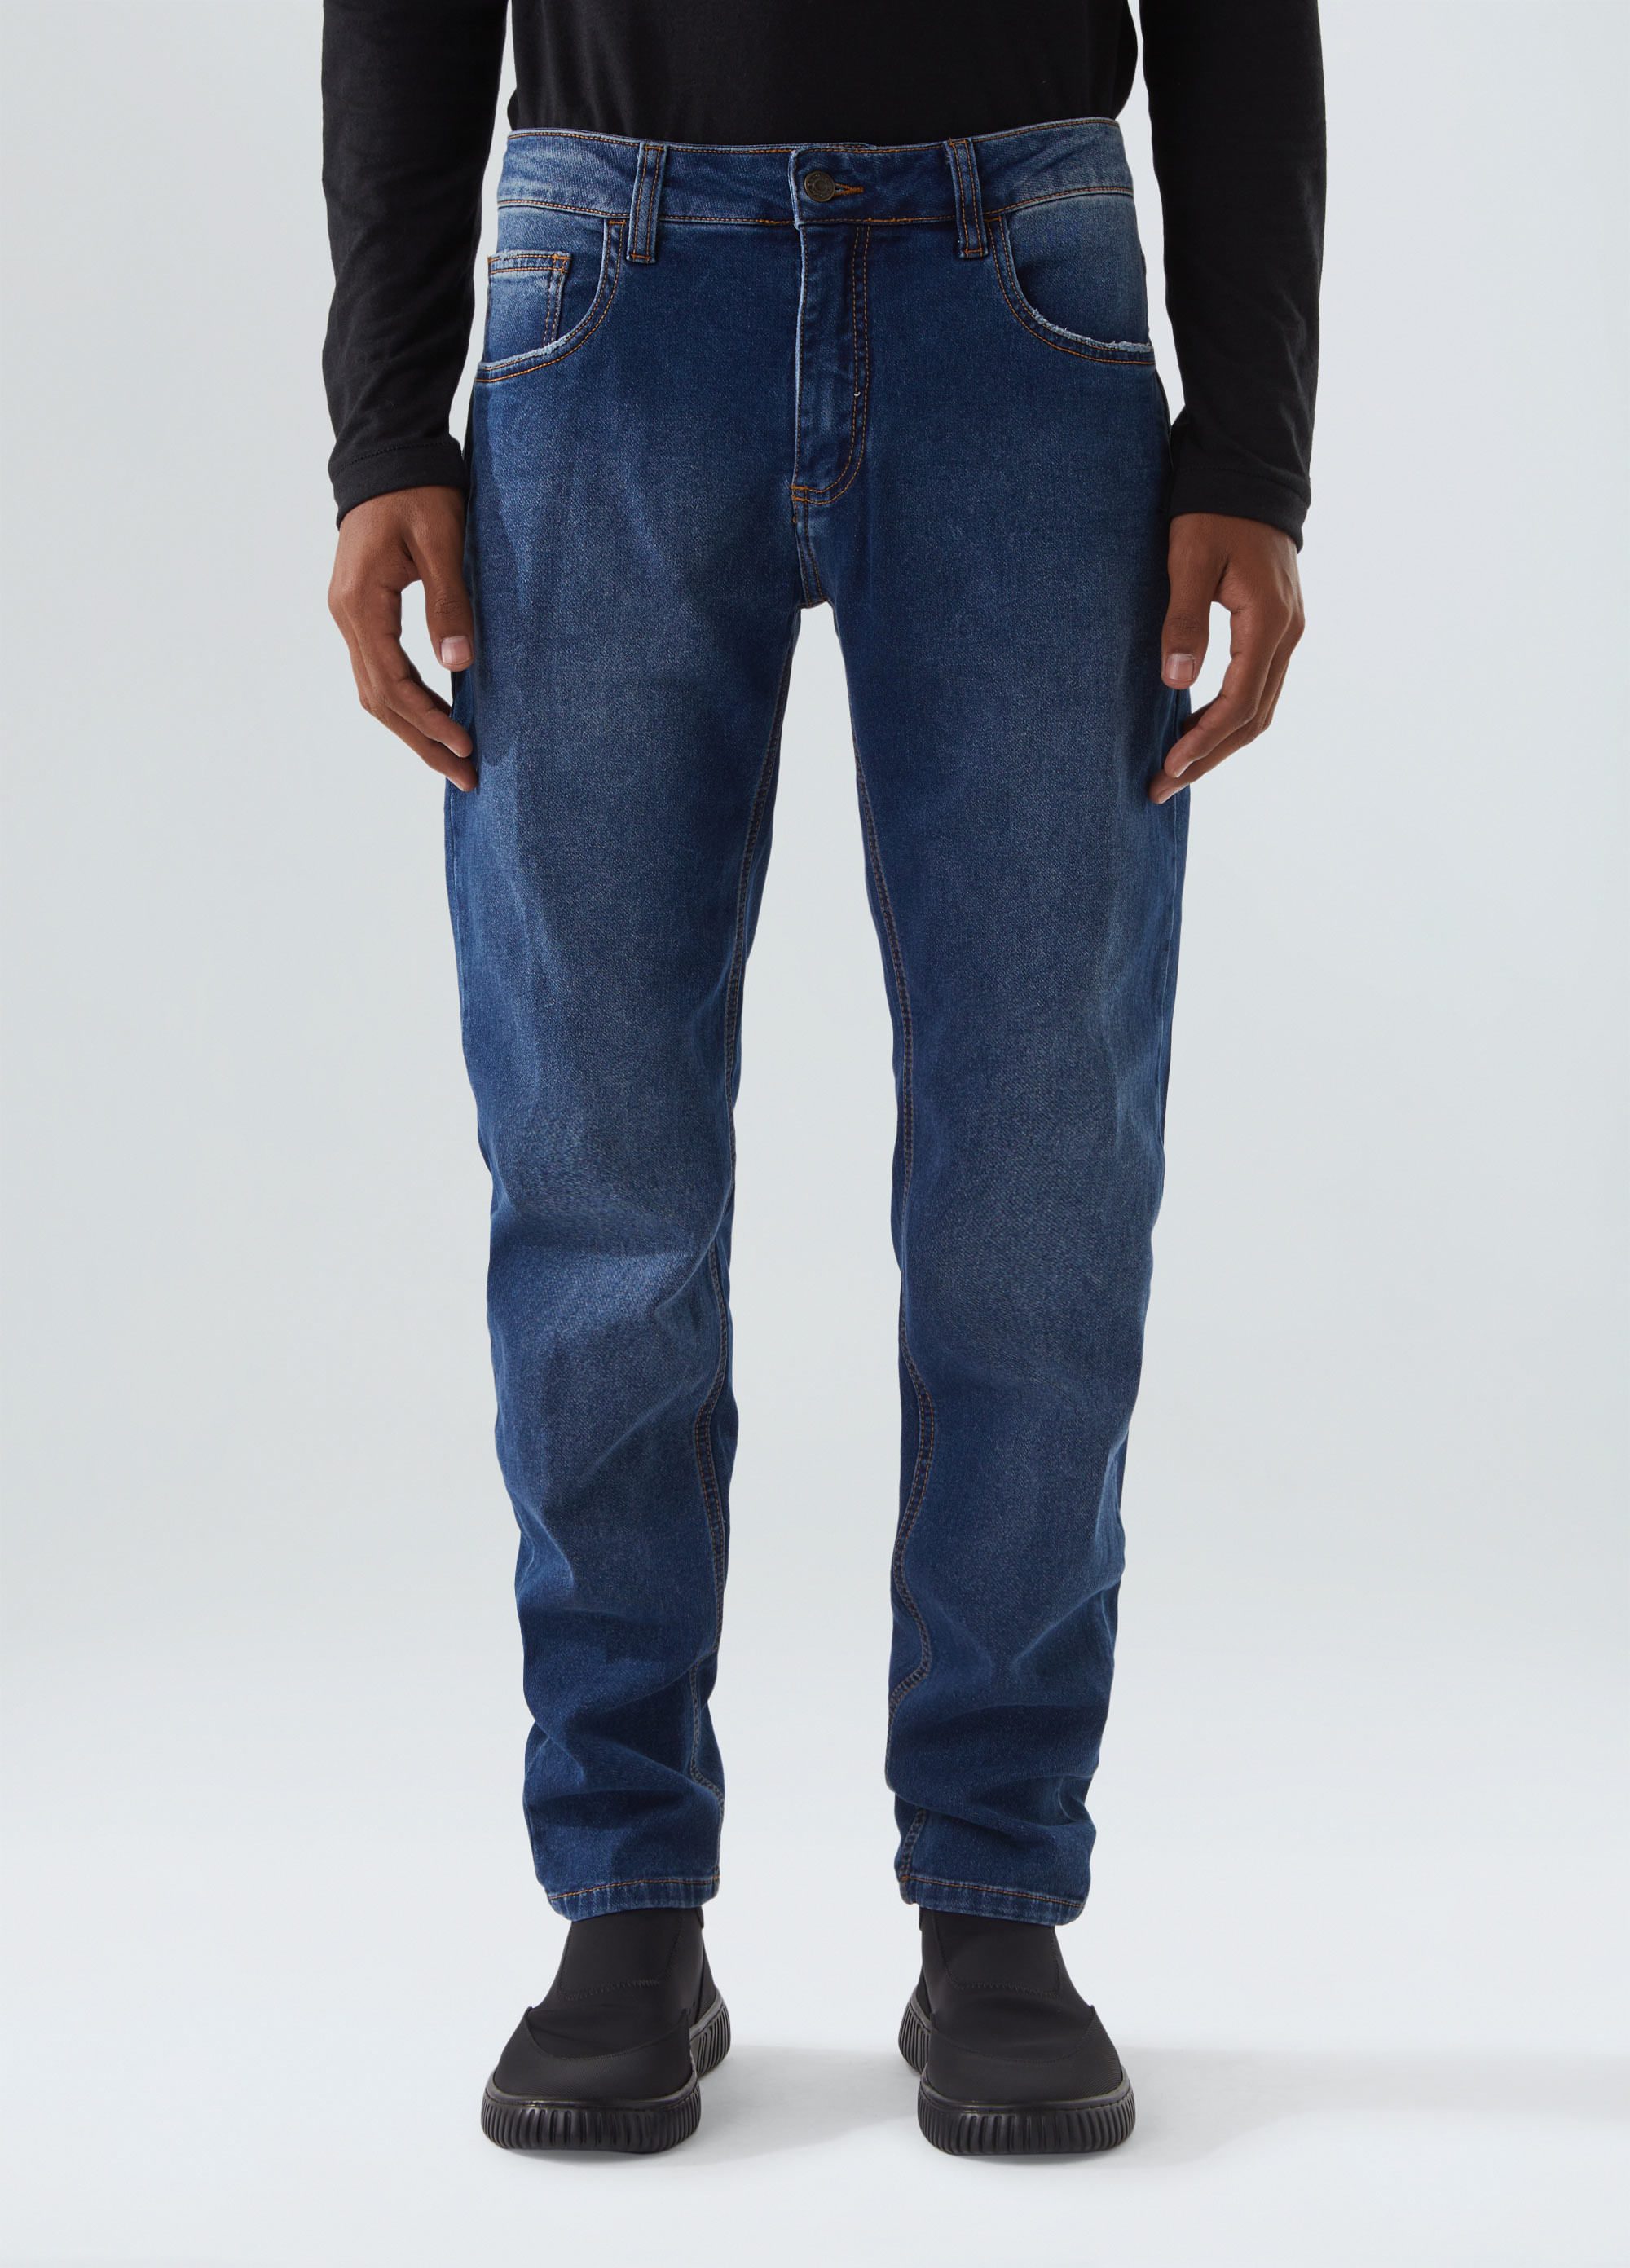 calca jeans comfort new